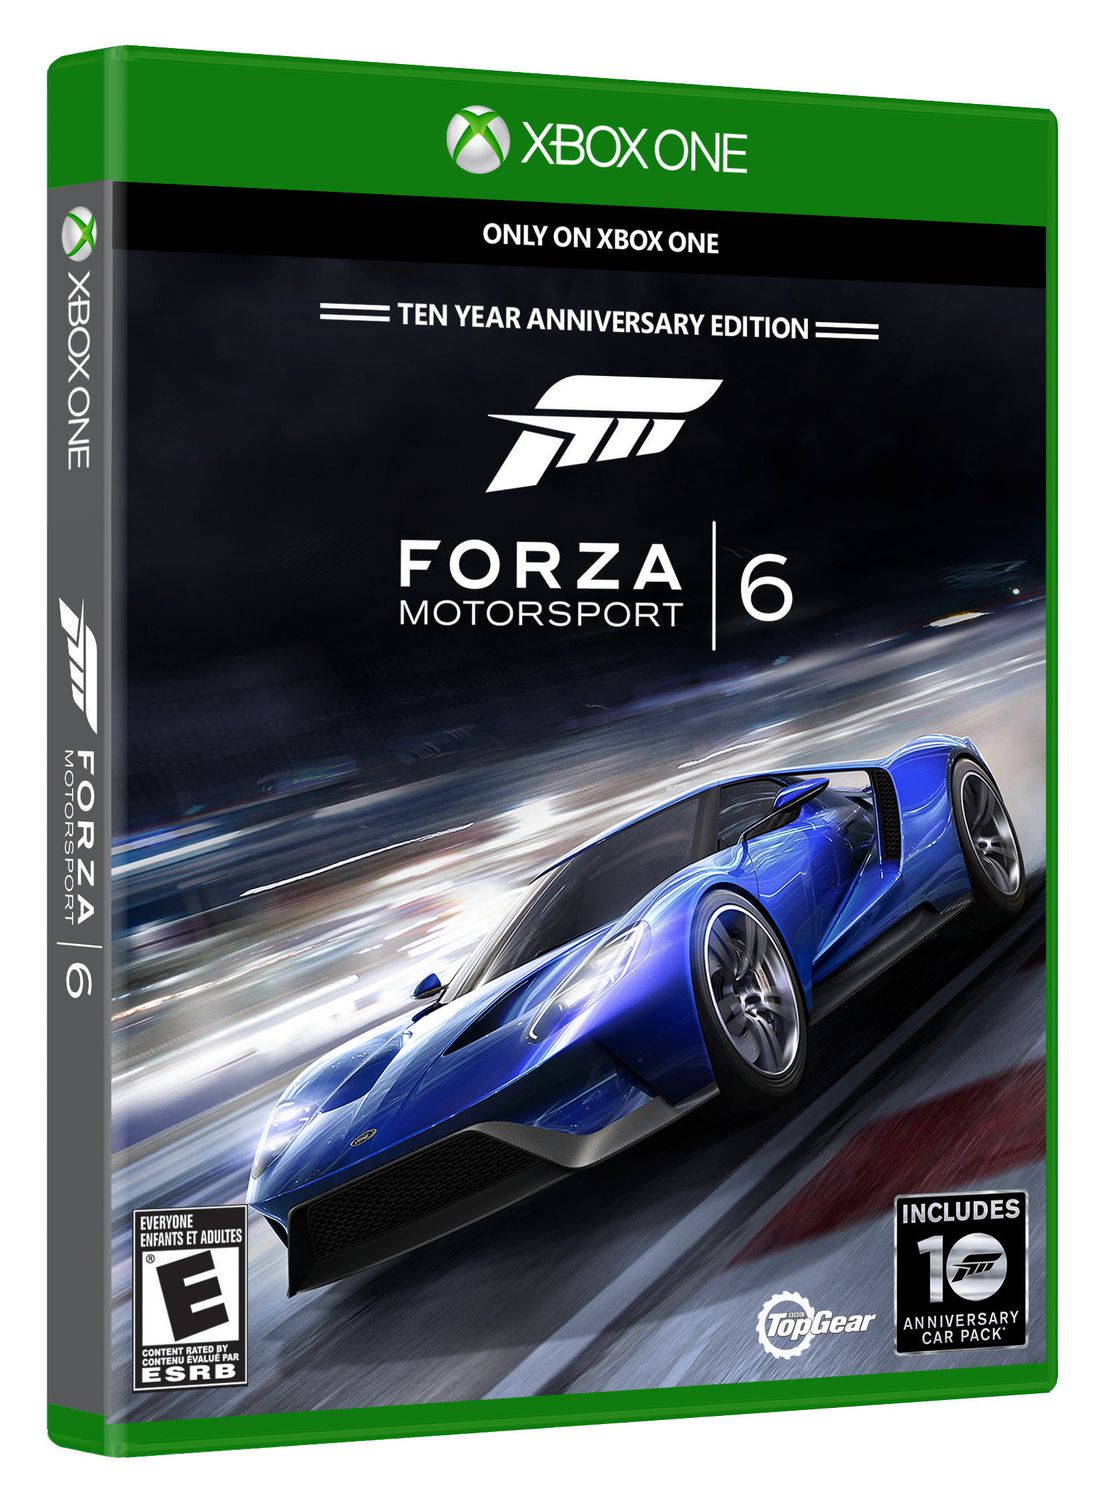 Forza Motorsport 6, Microsoft, Xbox One, 885370901450 - image 3 of 11